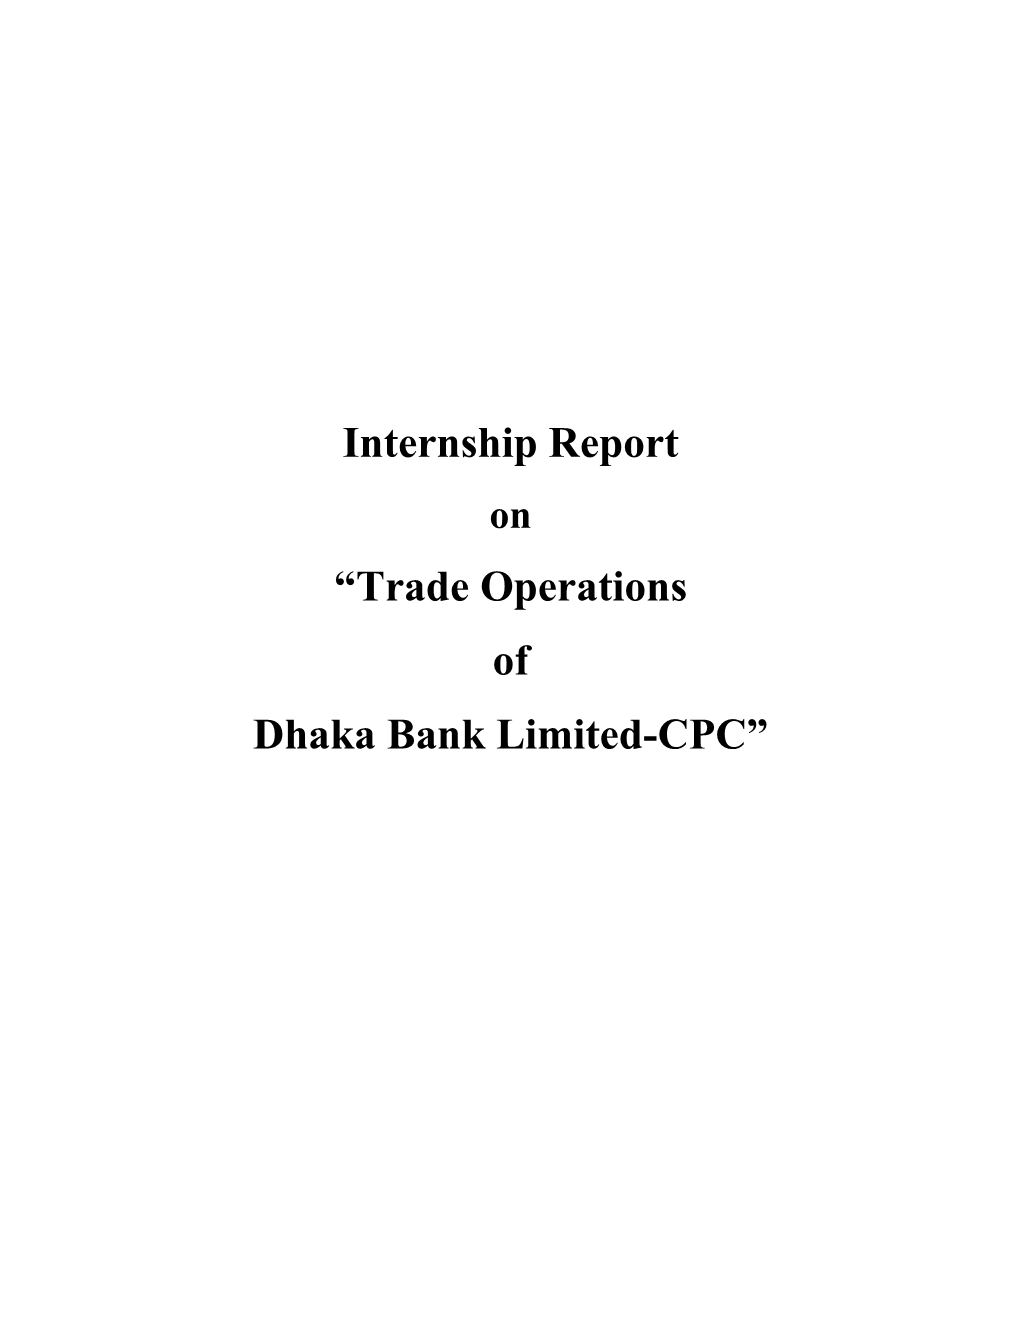 Internship Report “Trade Operations of Dhaka Bank Limited-CPC”